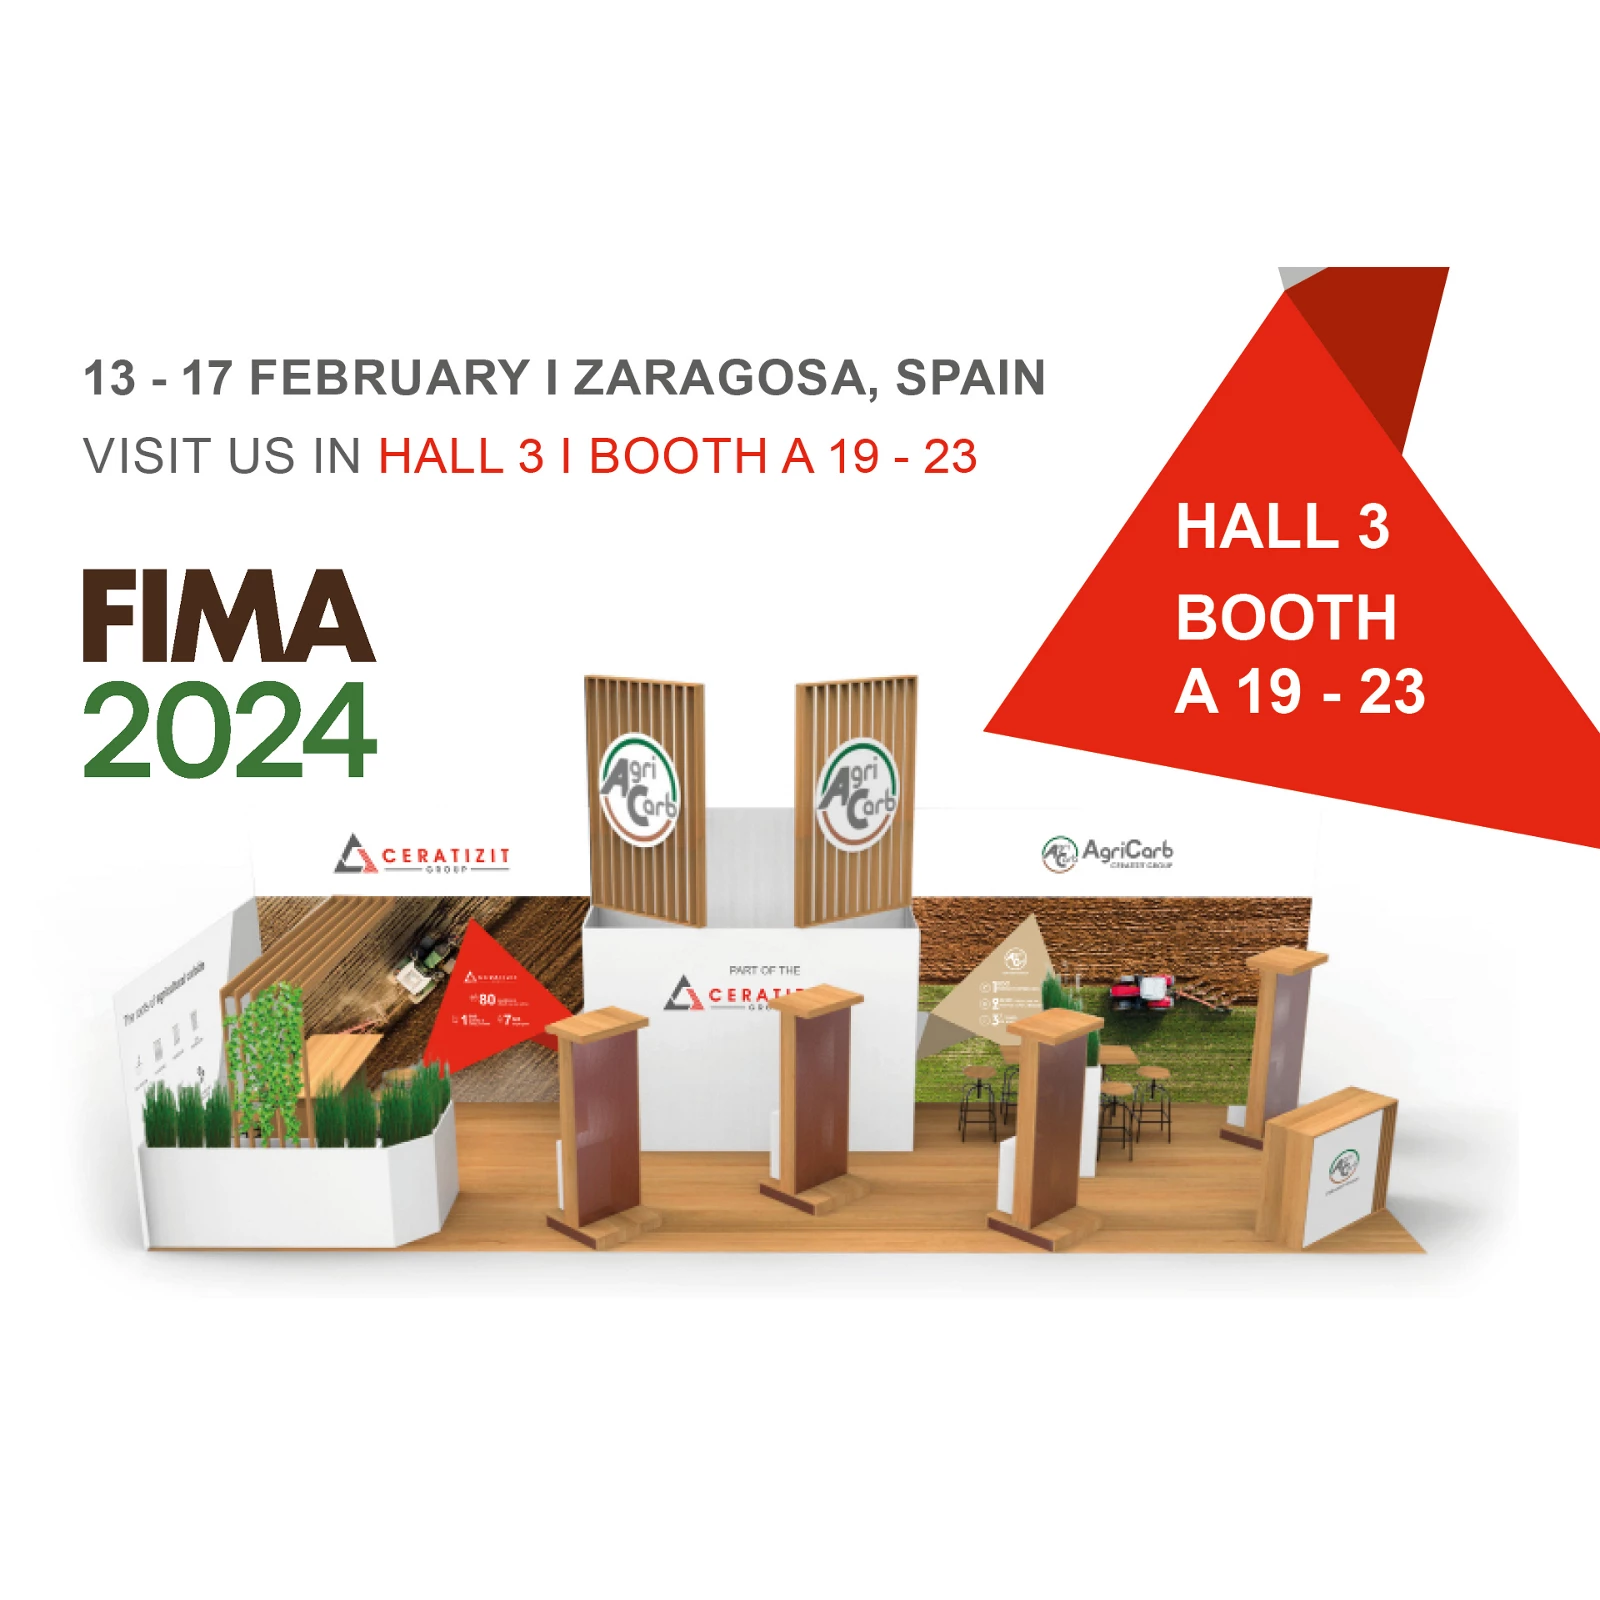 Visit us at the FIMA show in Zaragoza